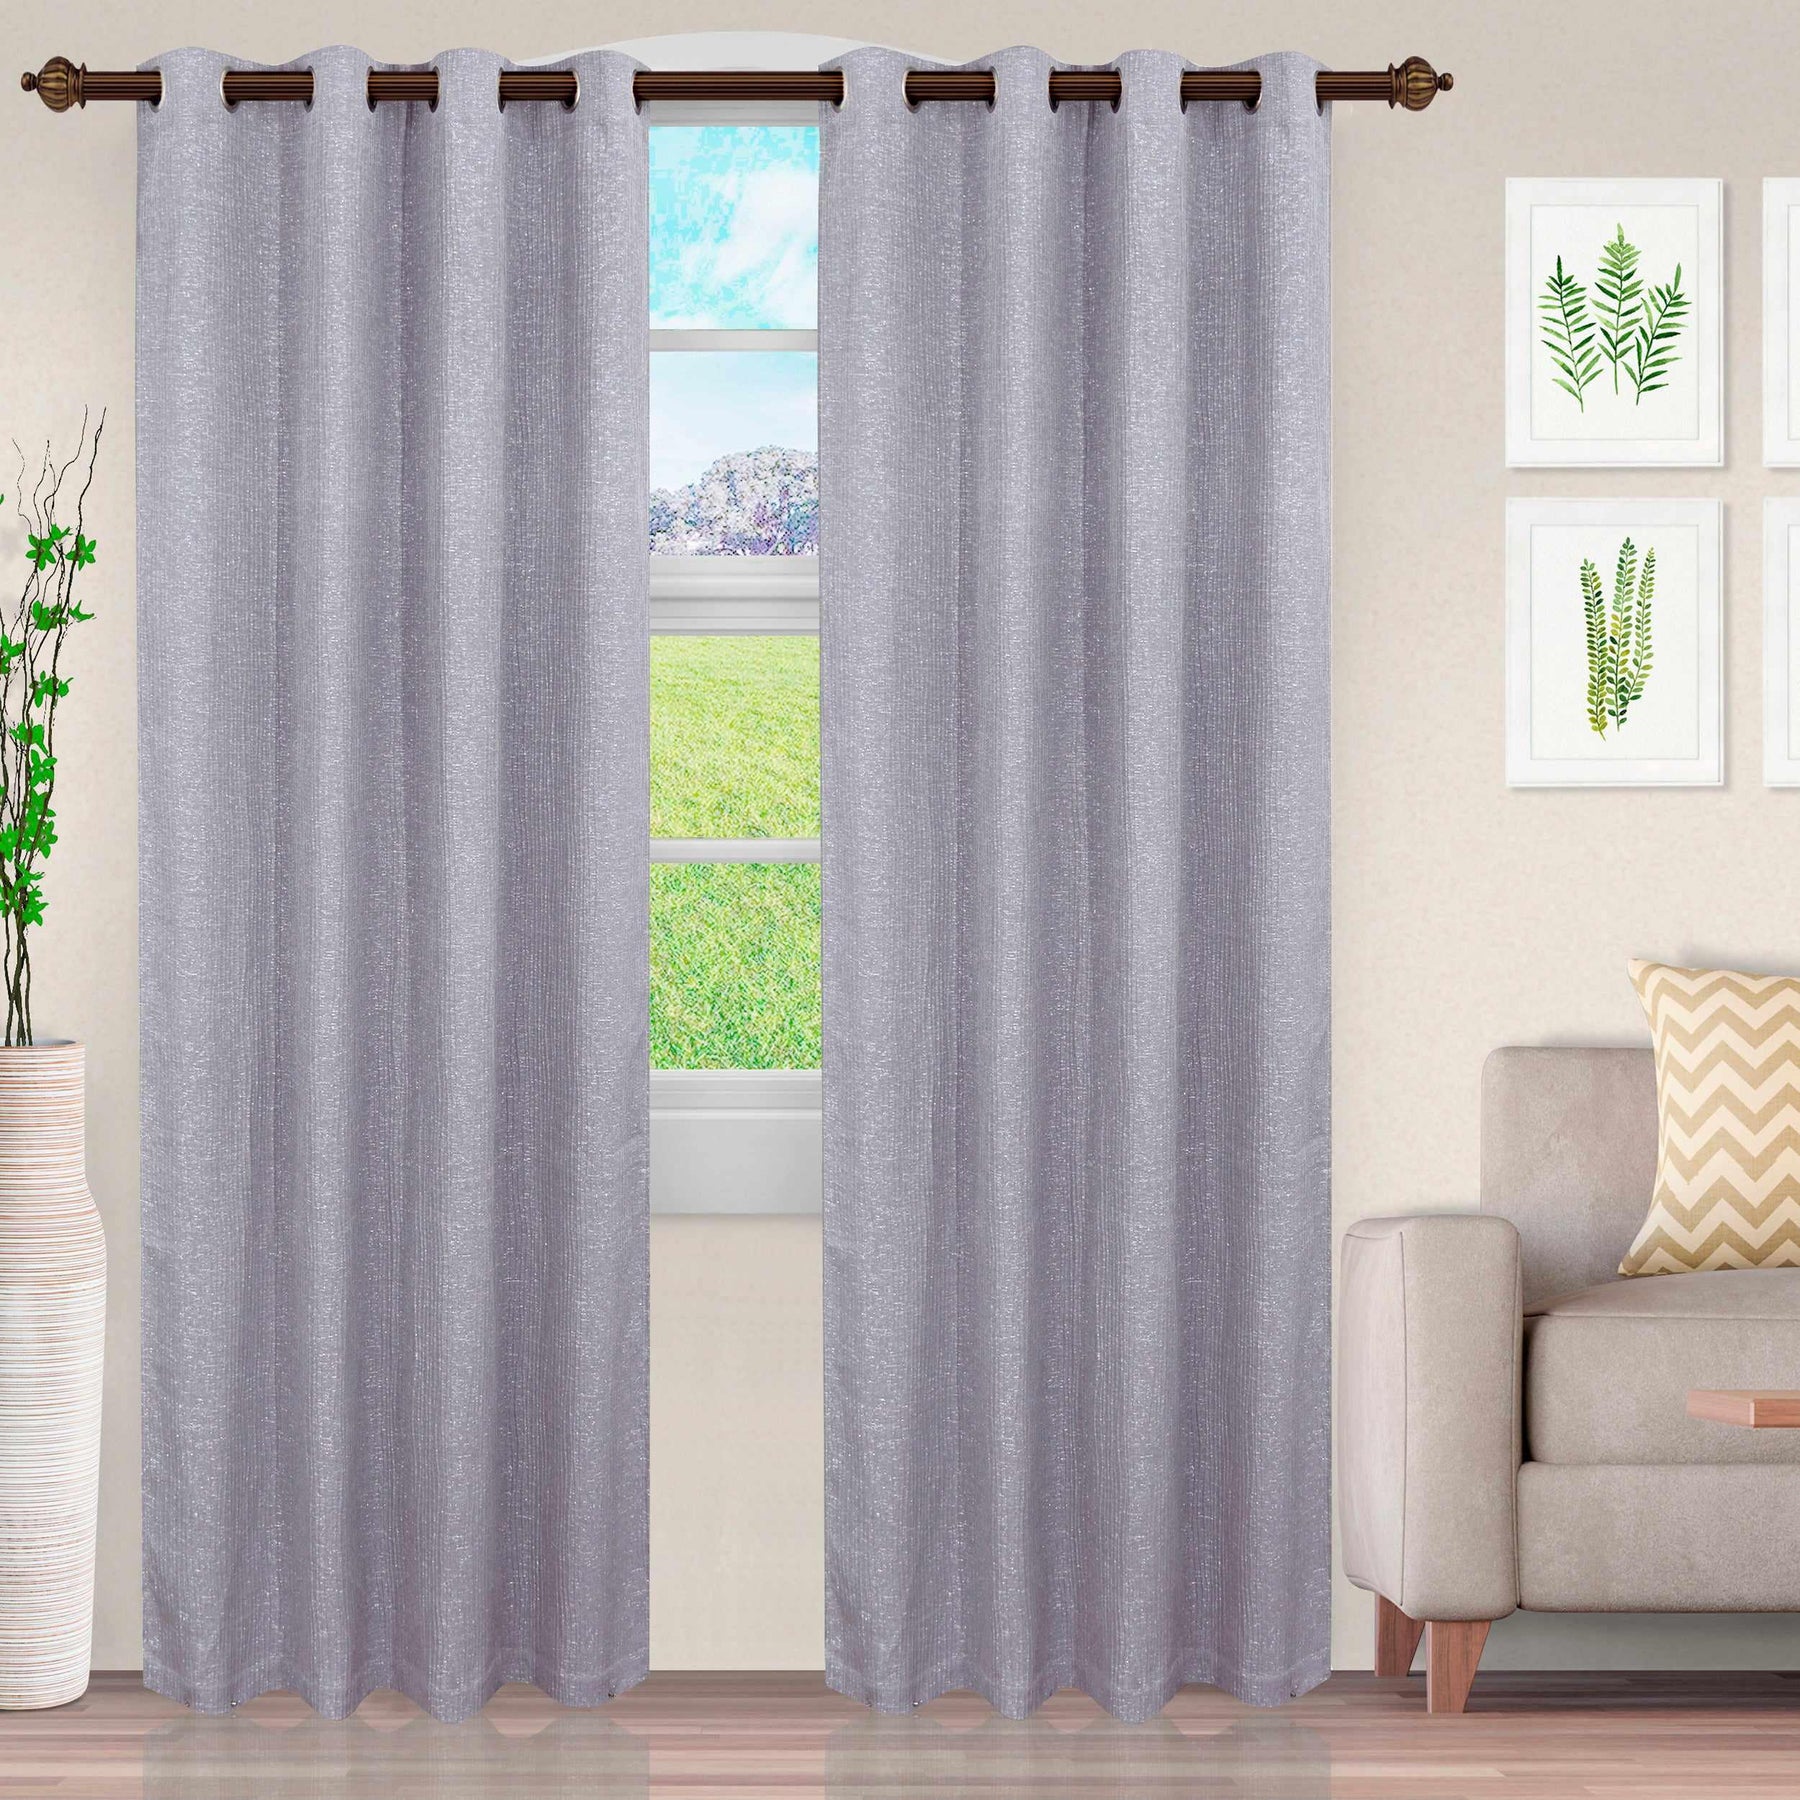 Metallic Jacquard 2-Piece Grommet Curtain Panel Set - Grey